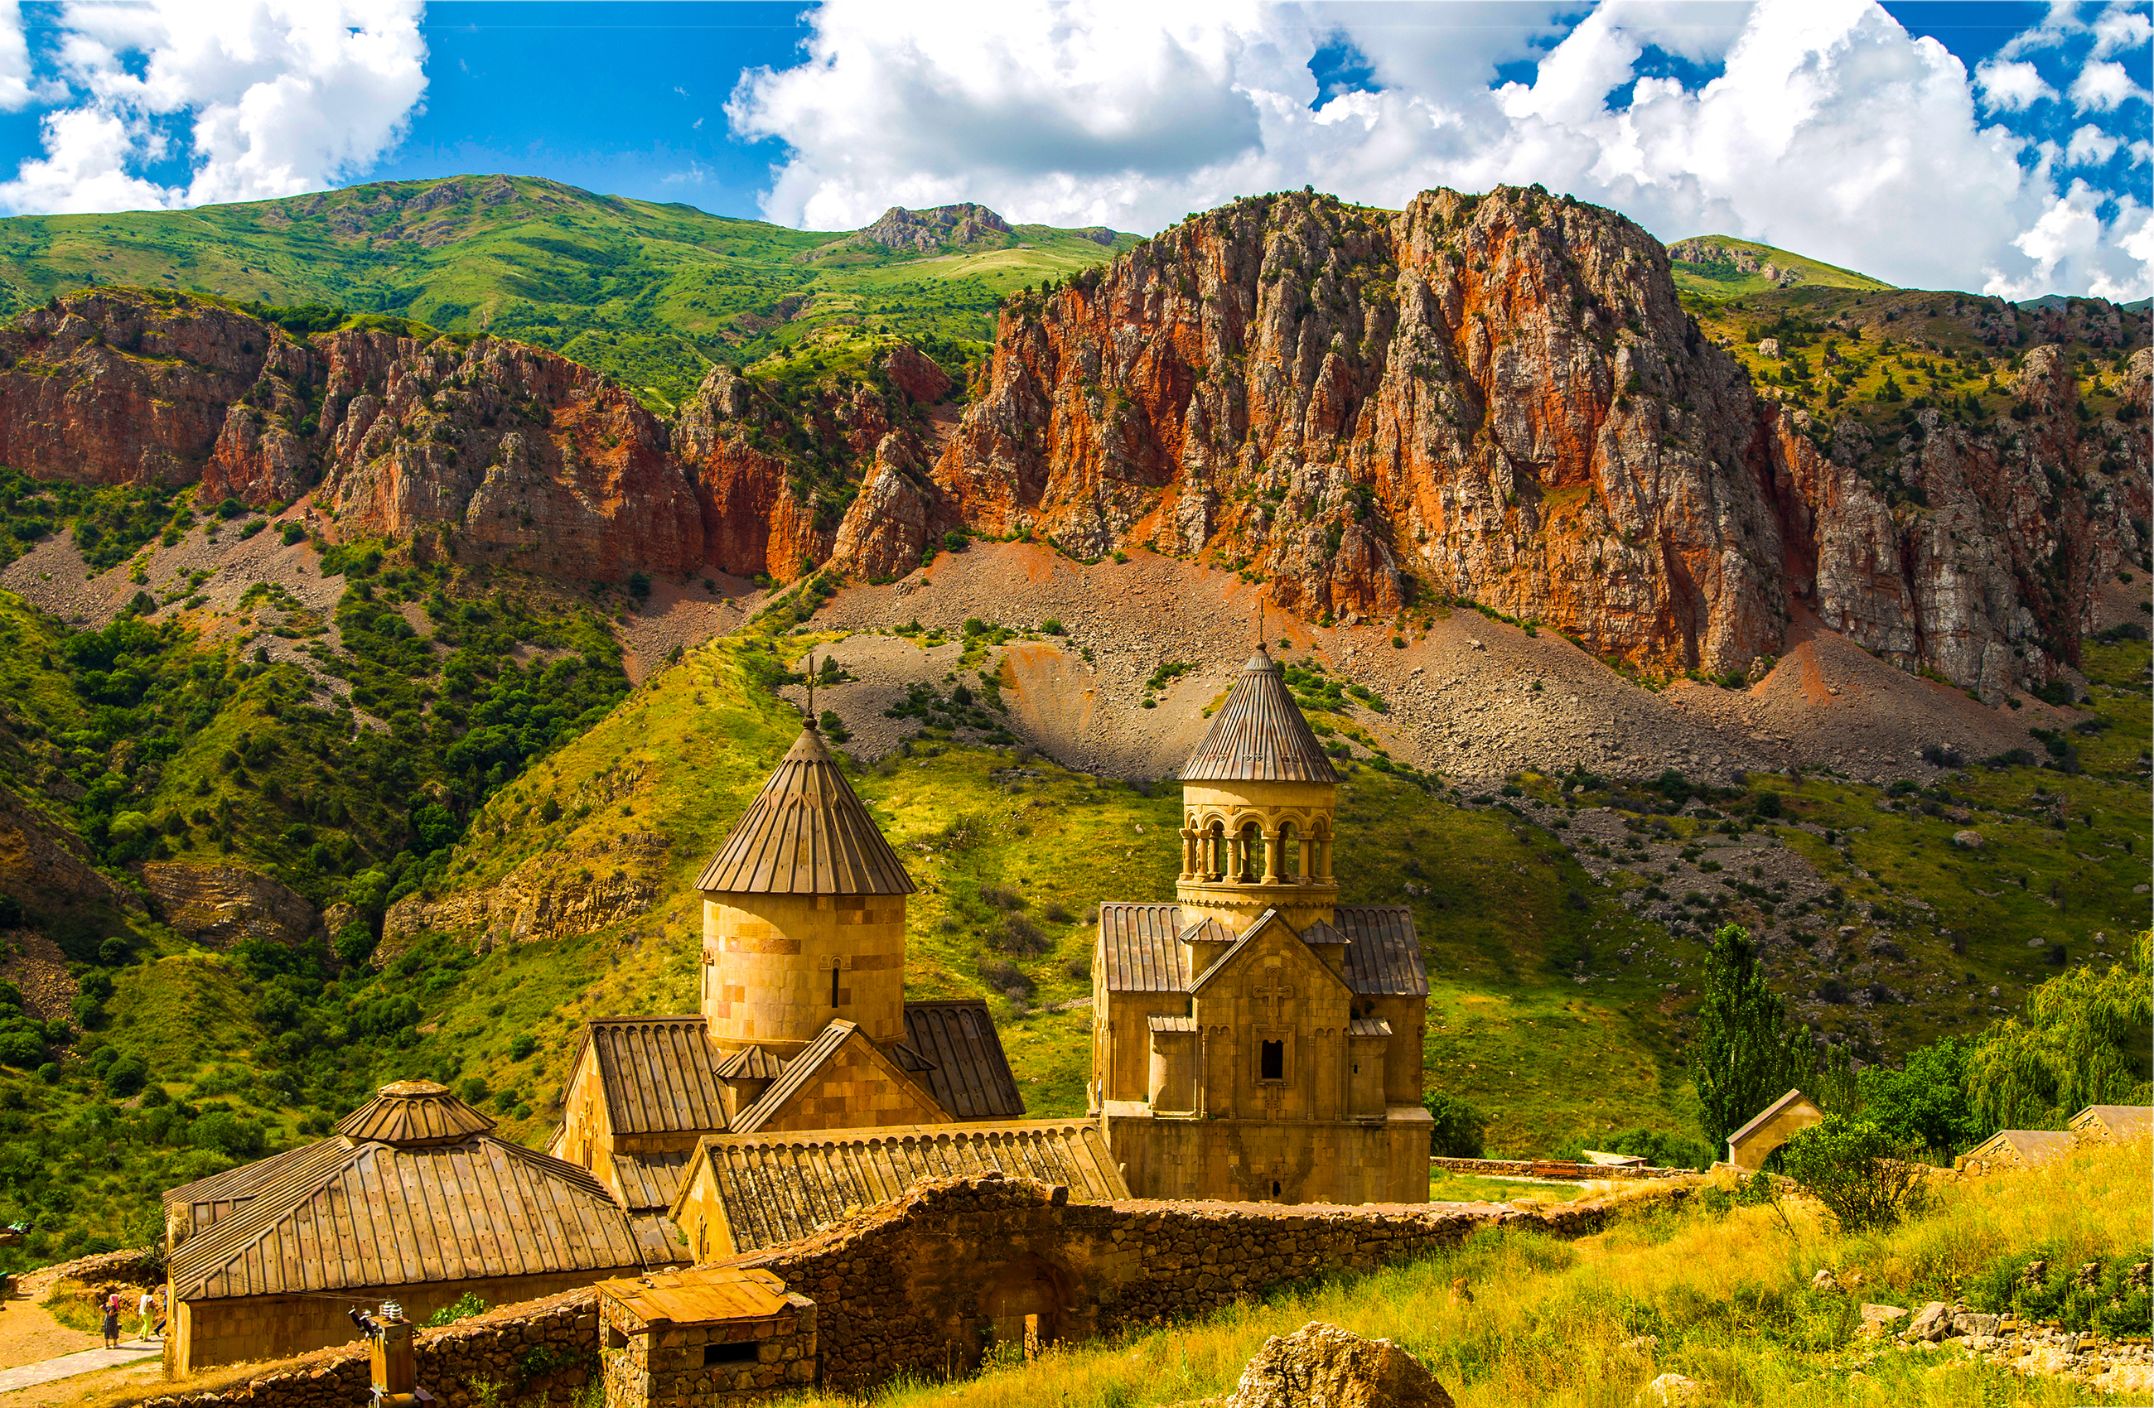 Armenia travel advice 